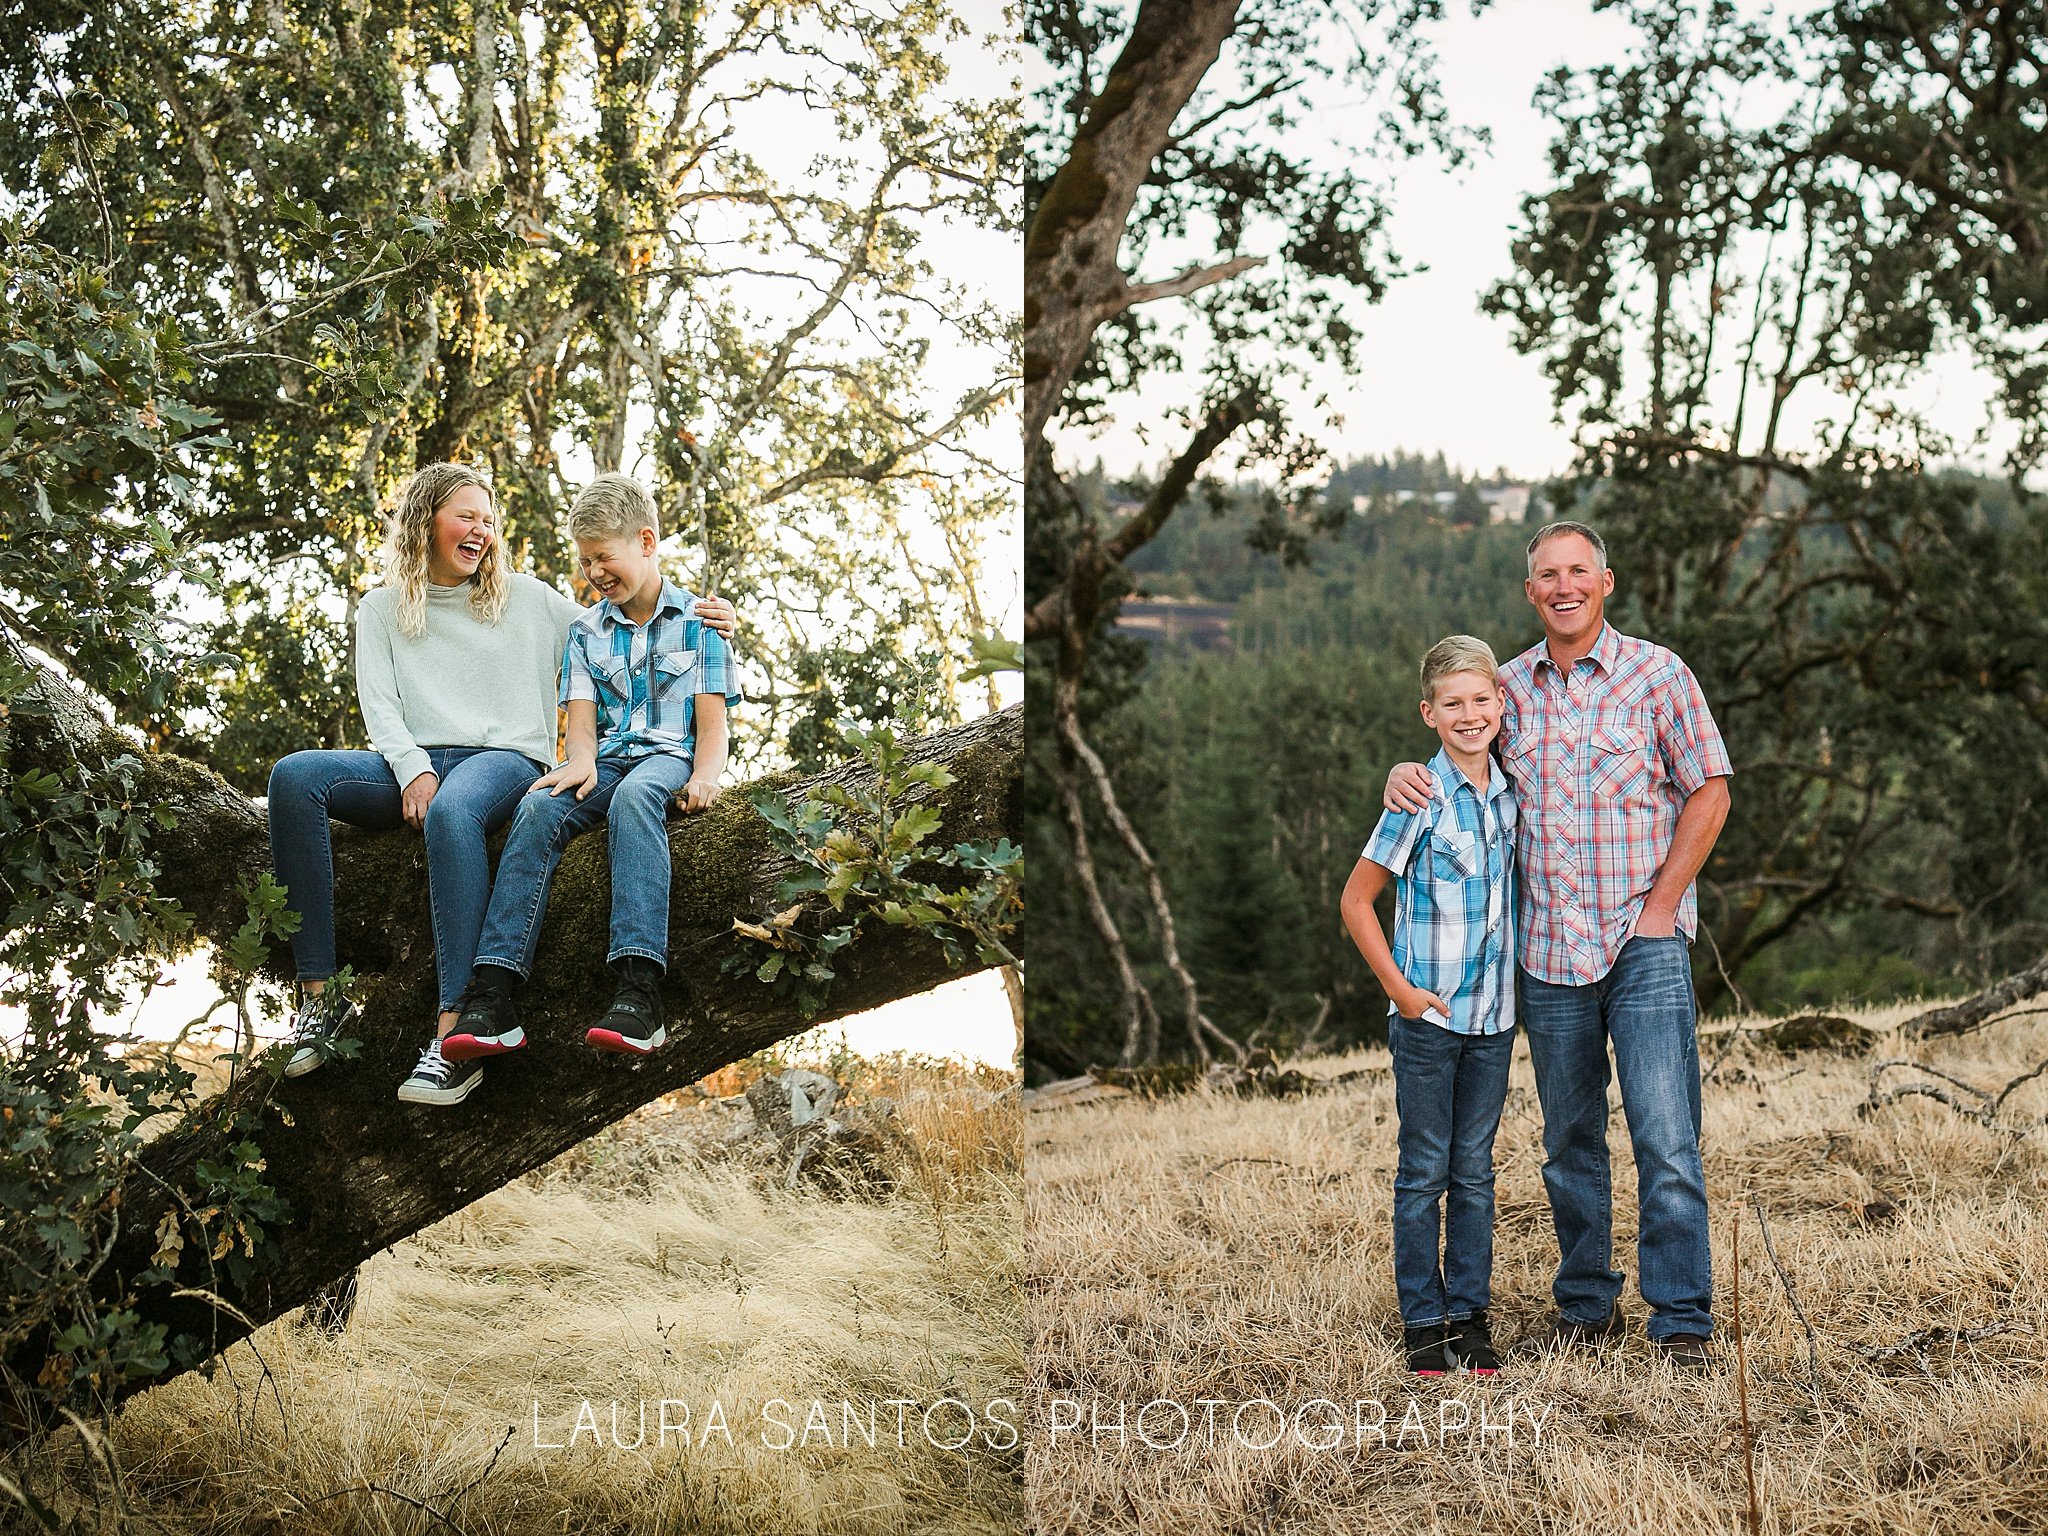 Laura Santos Photography Portland Oregon Family Photographer_2624.jpg